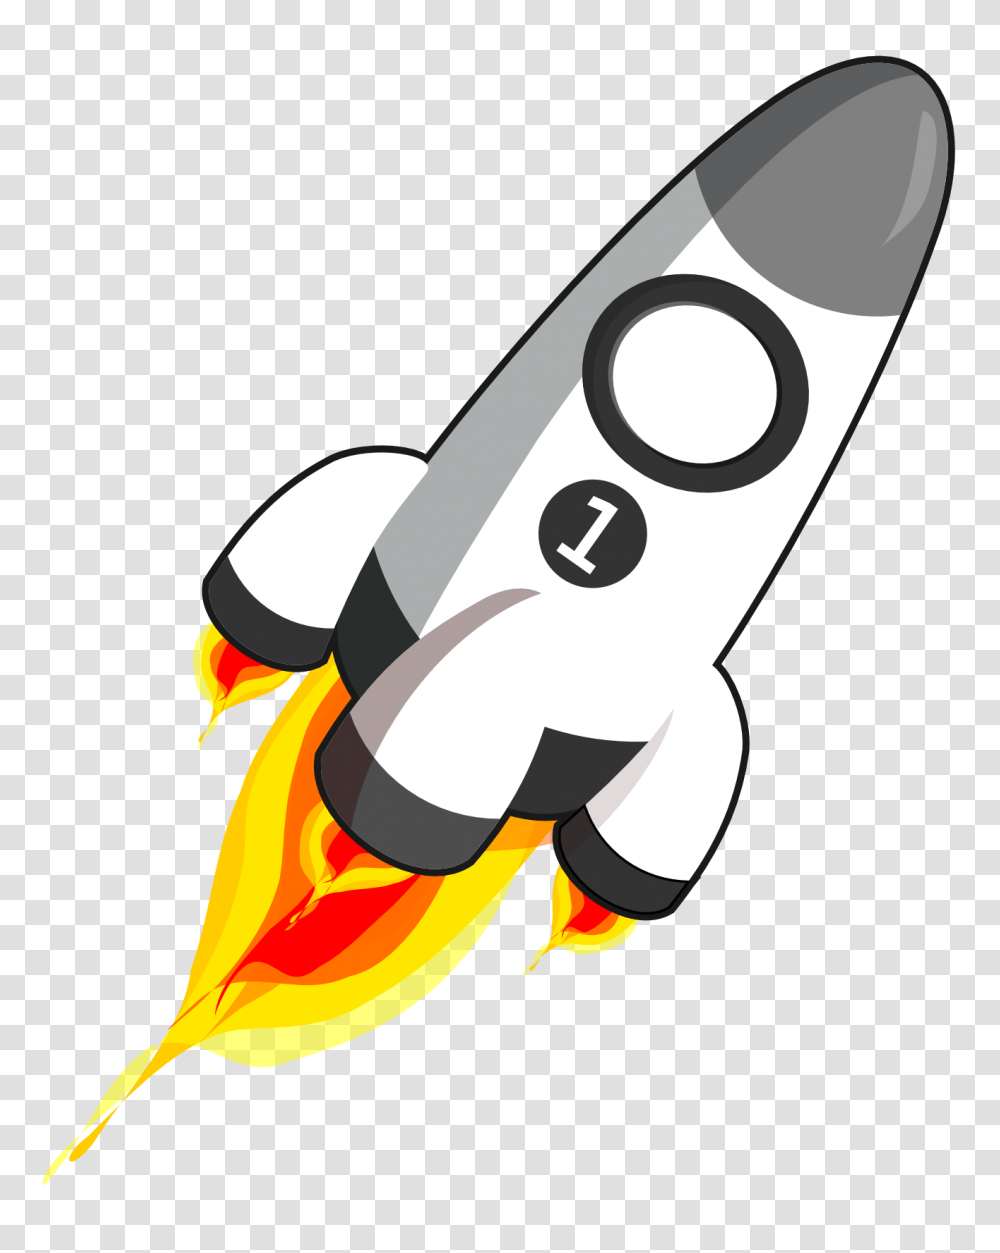 Icarus Rocket Clip Art, Weapon, Weaponry, Bomb Transparent Png